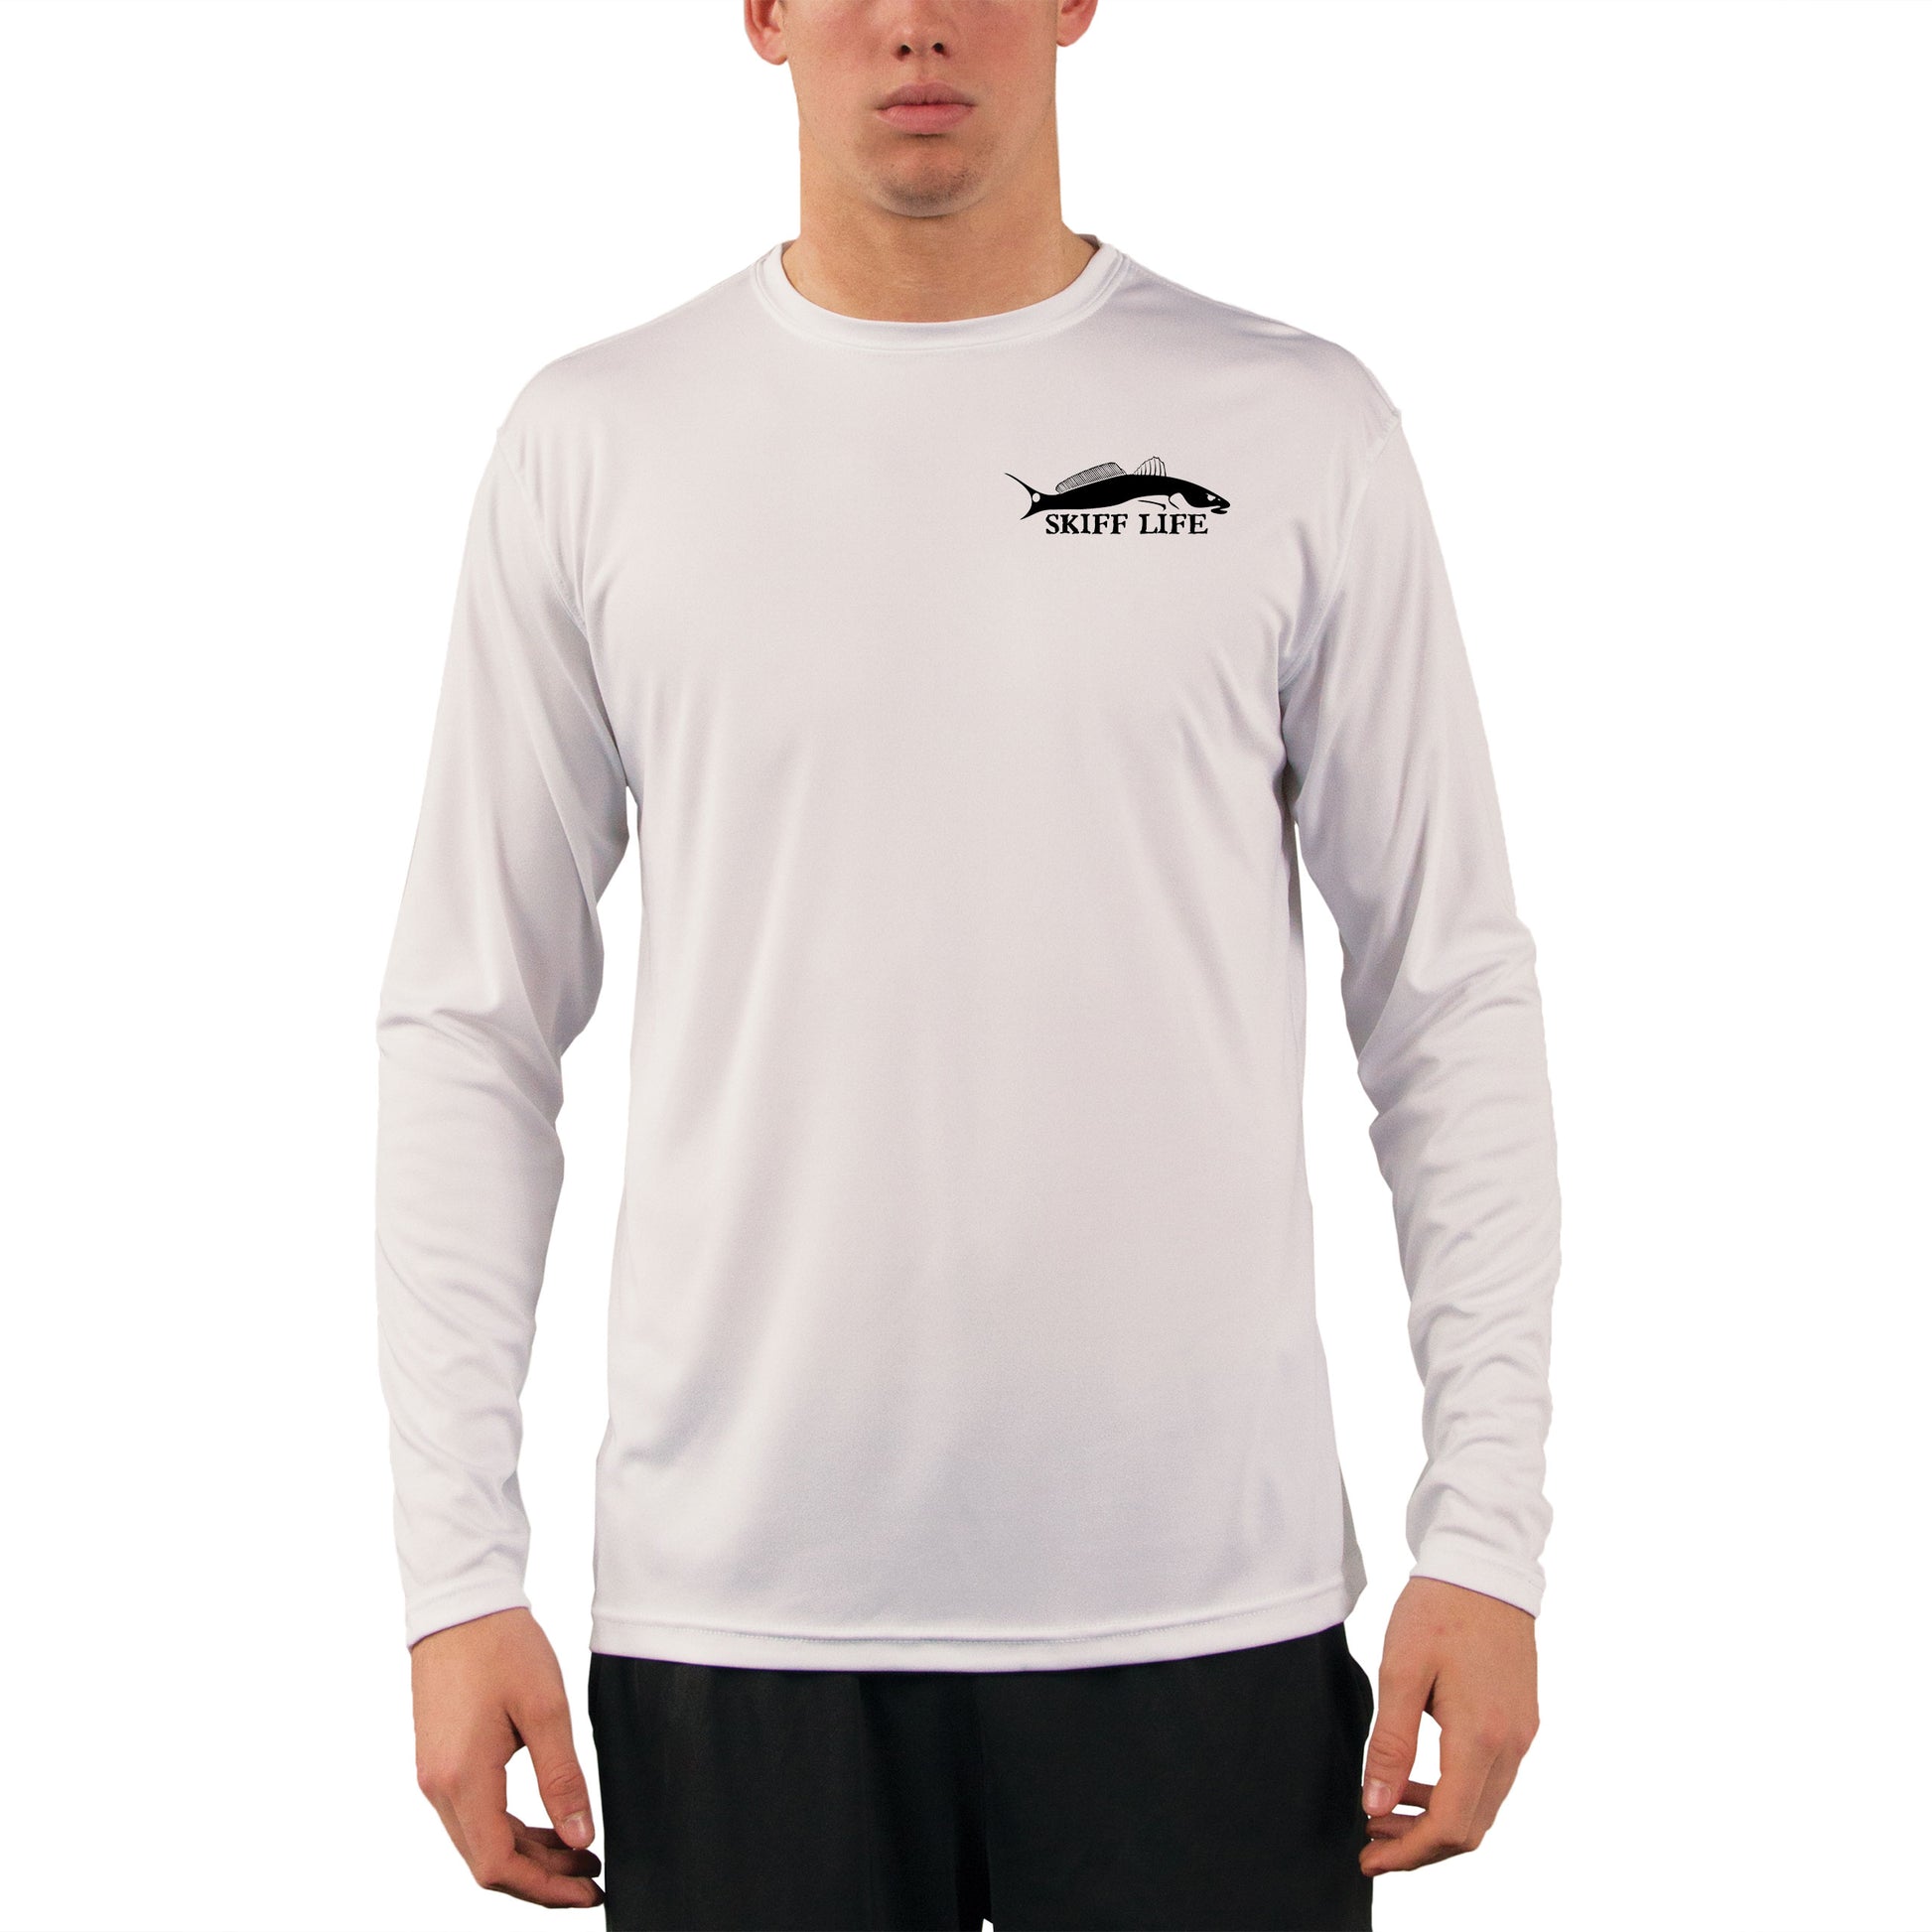 Tarpon Fly Fishing Shirt for Men by Pat Ford